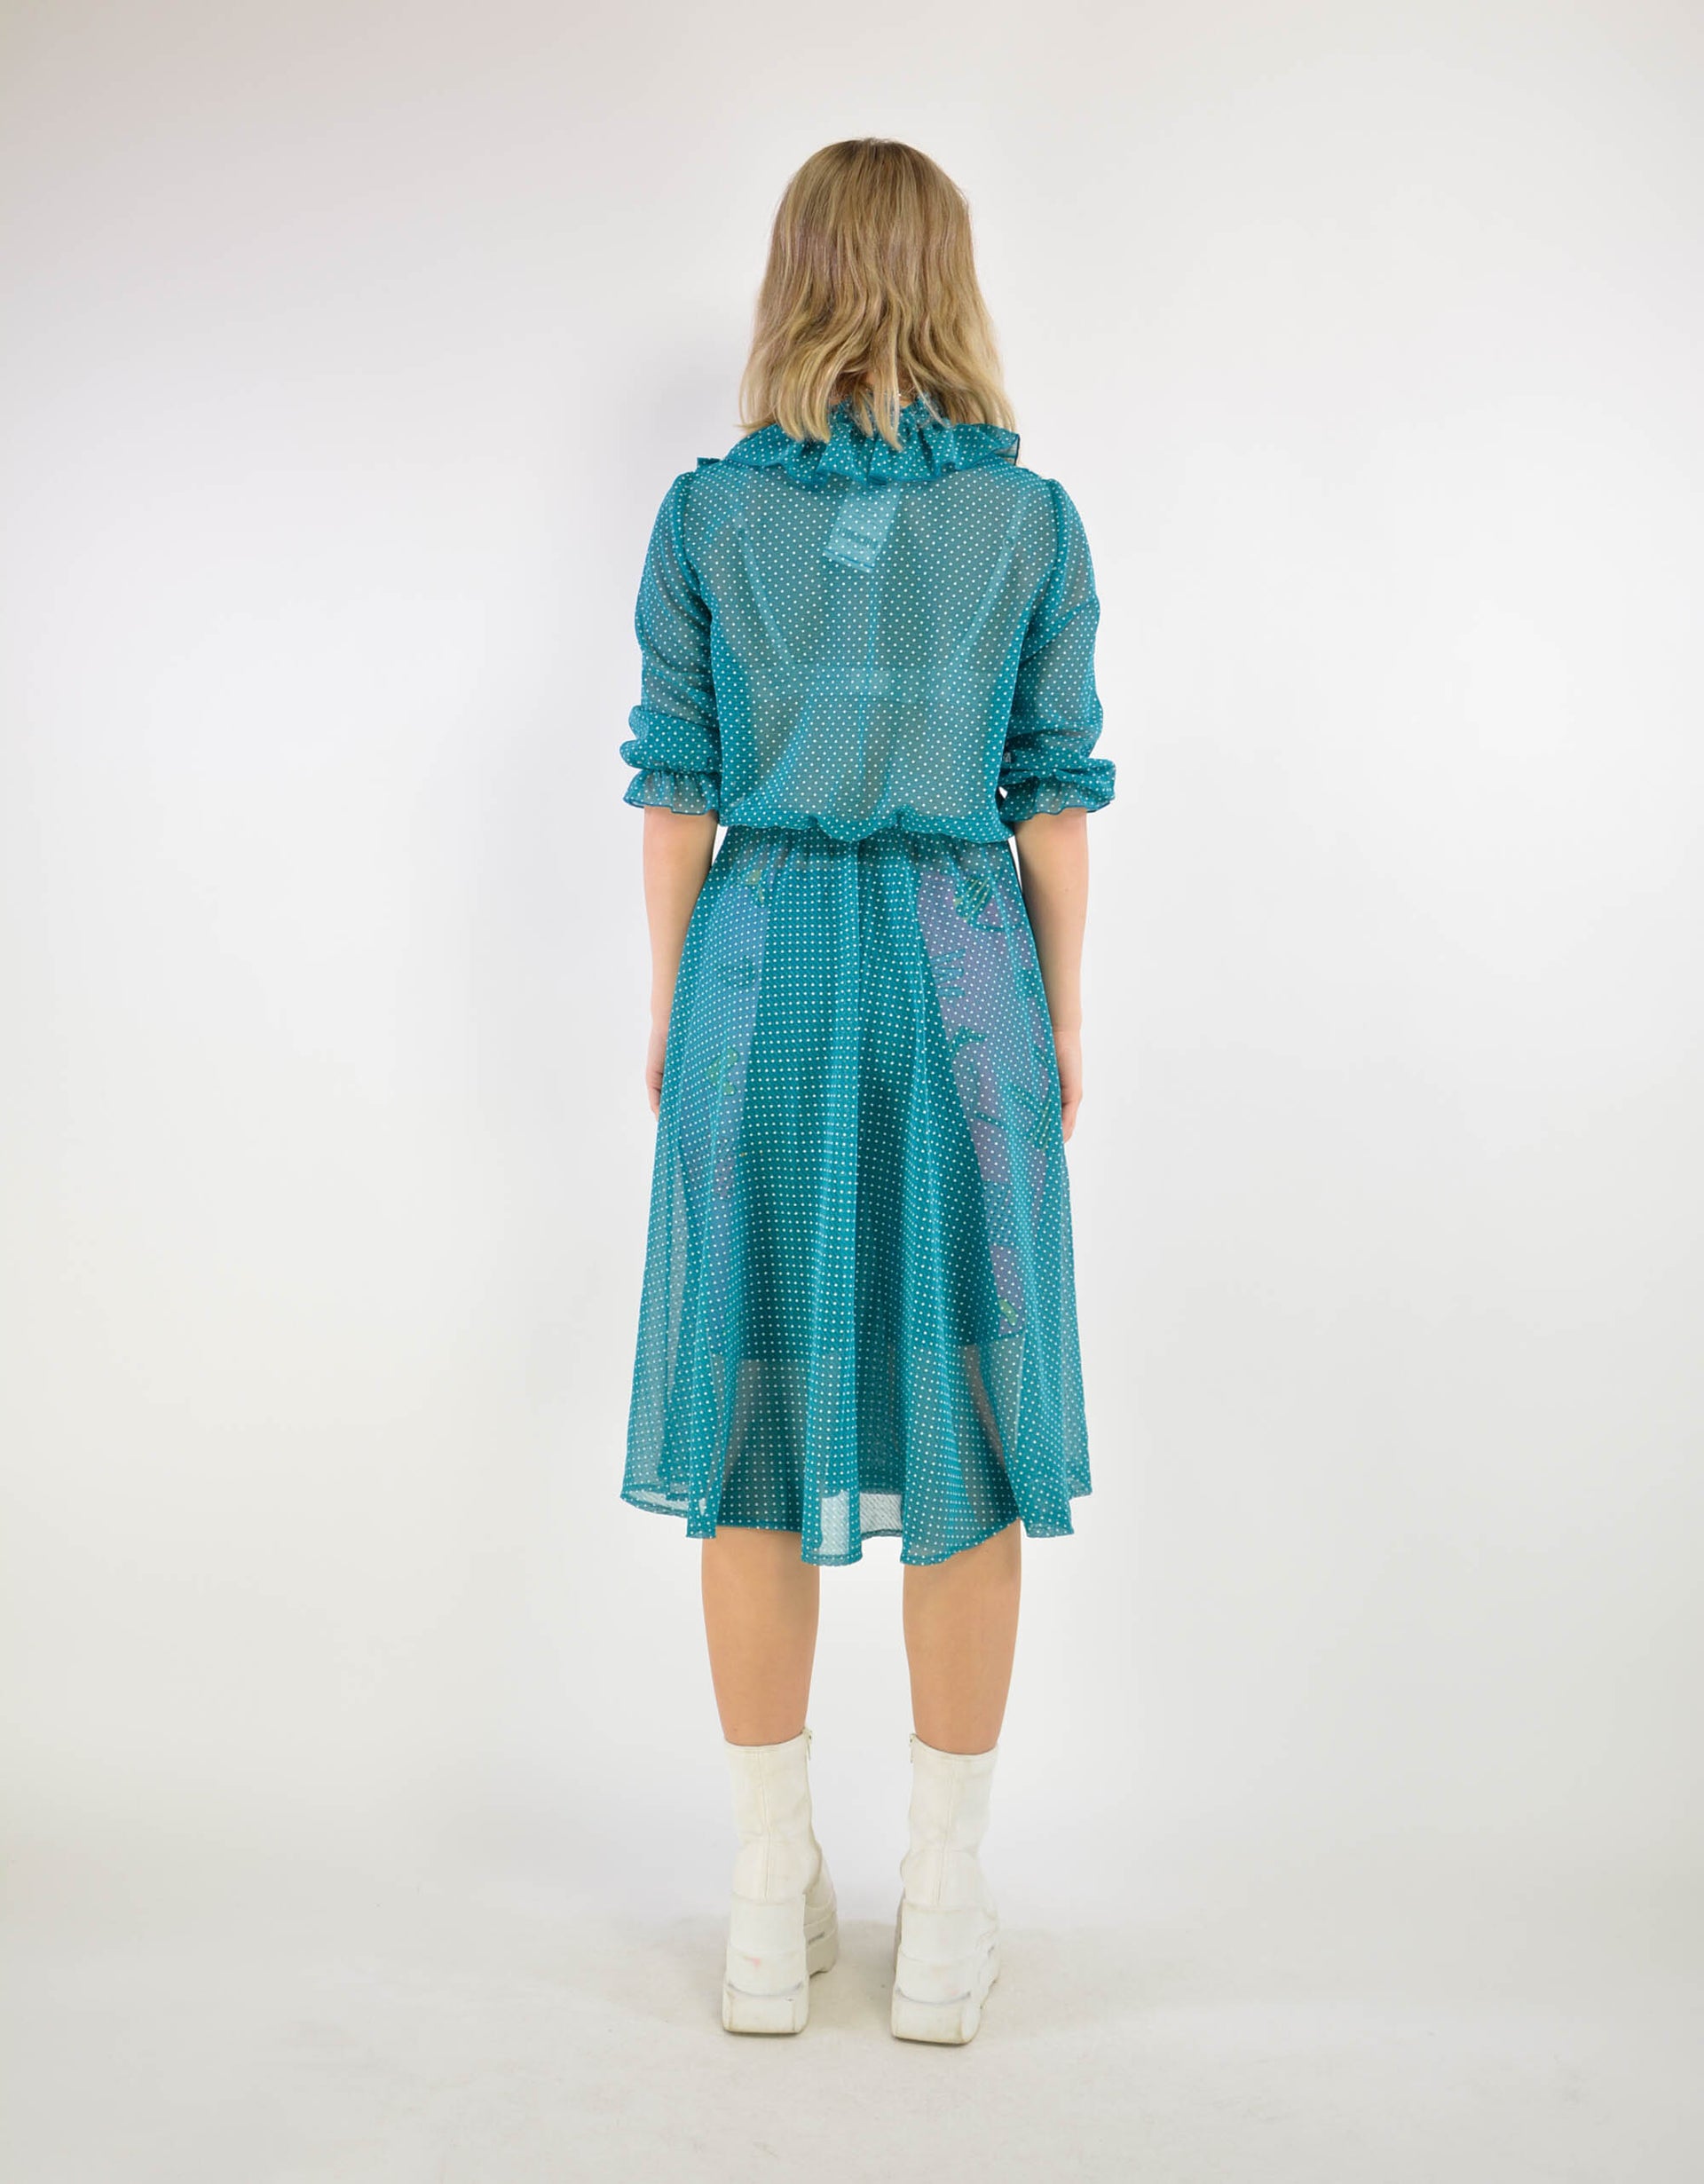 Turquoise dot dress - PICKNWEIGHT - VINTAGE KILO STORE